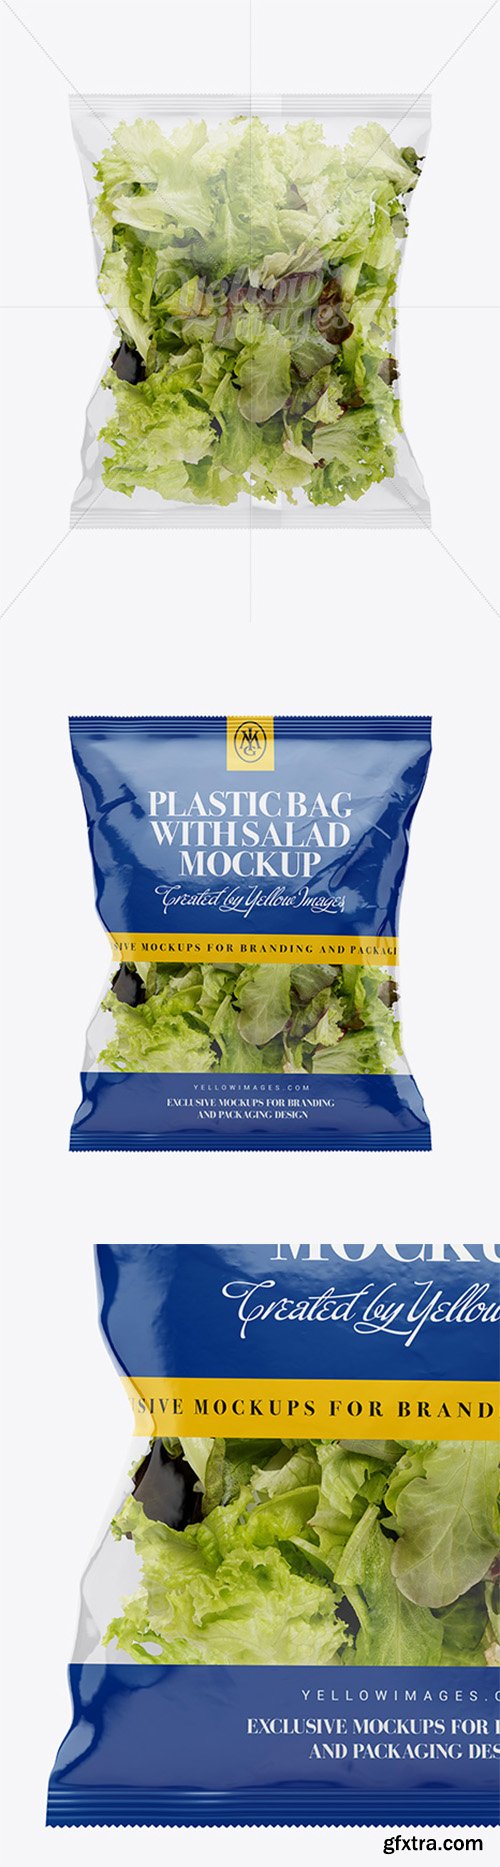 Clear Plastic Bag With Salad Mockup 15768